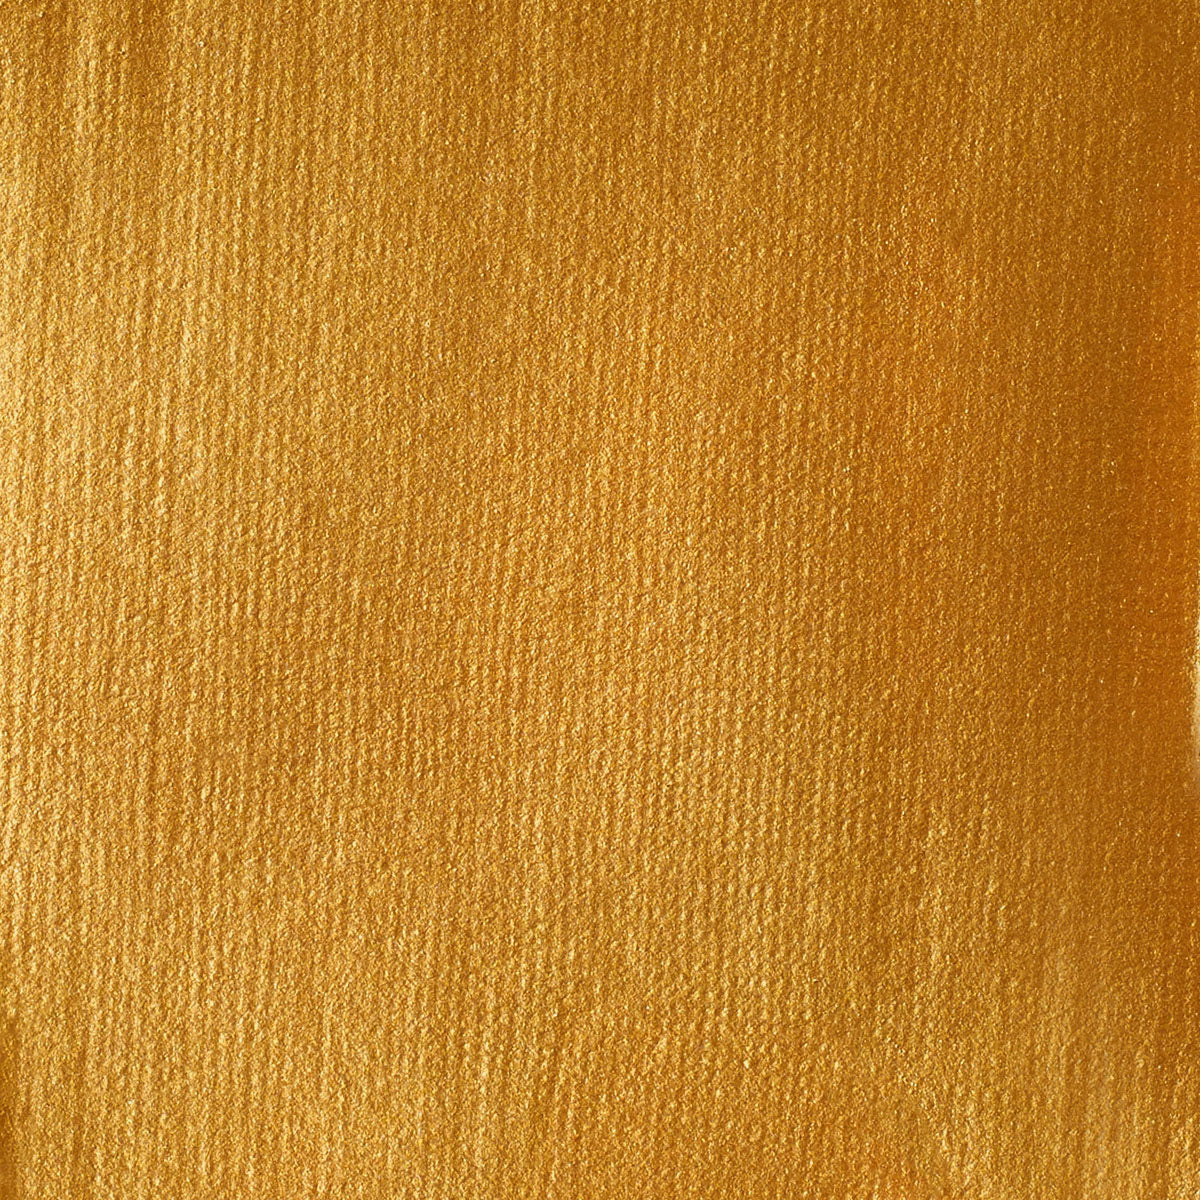 Liquitex - Acrylic Gouache 59ml S1 - Iridescent Bright Gold